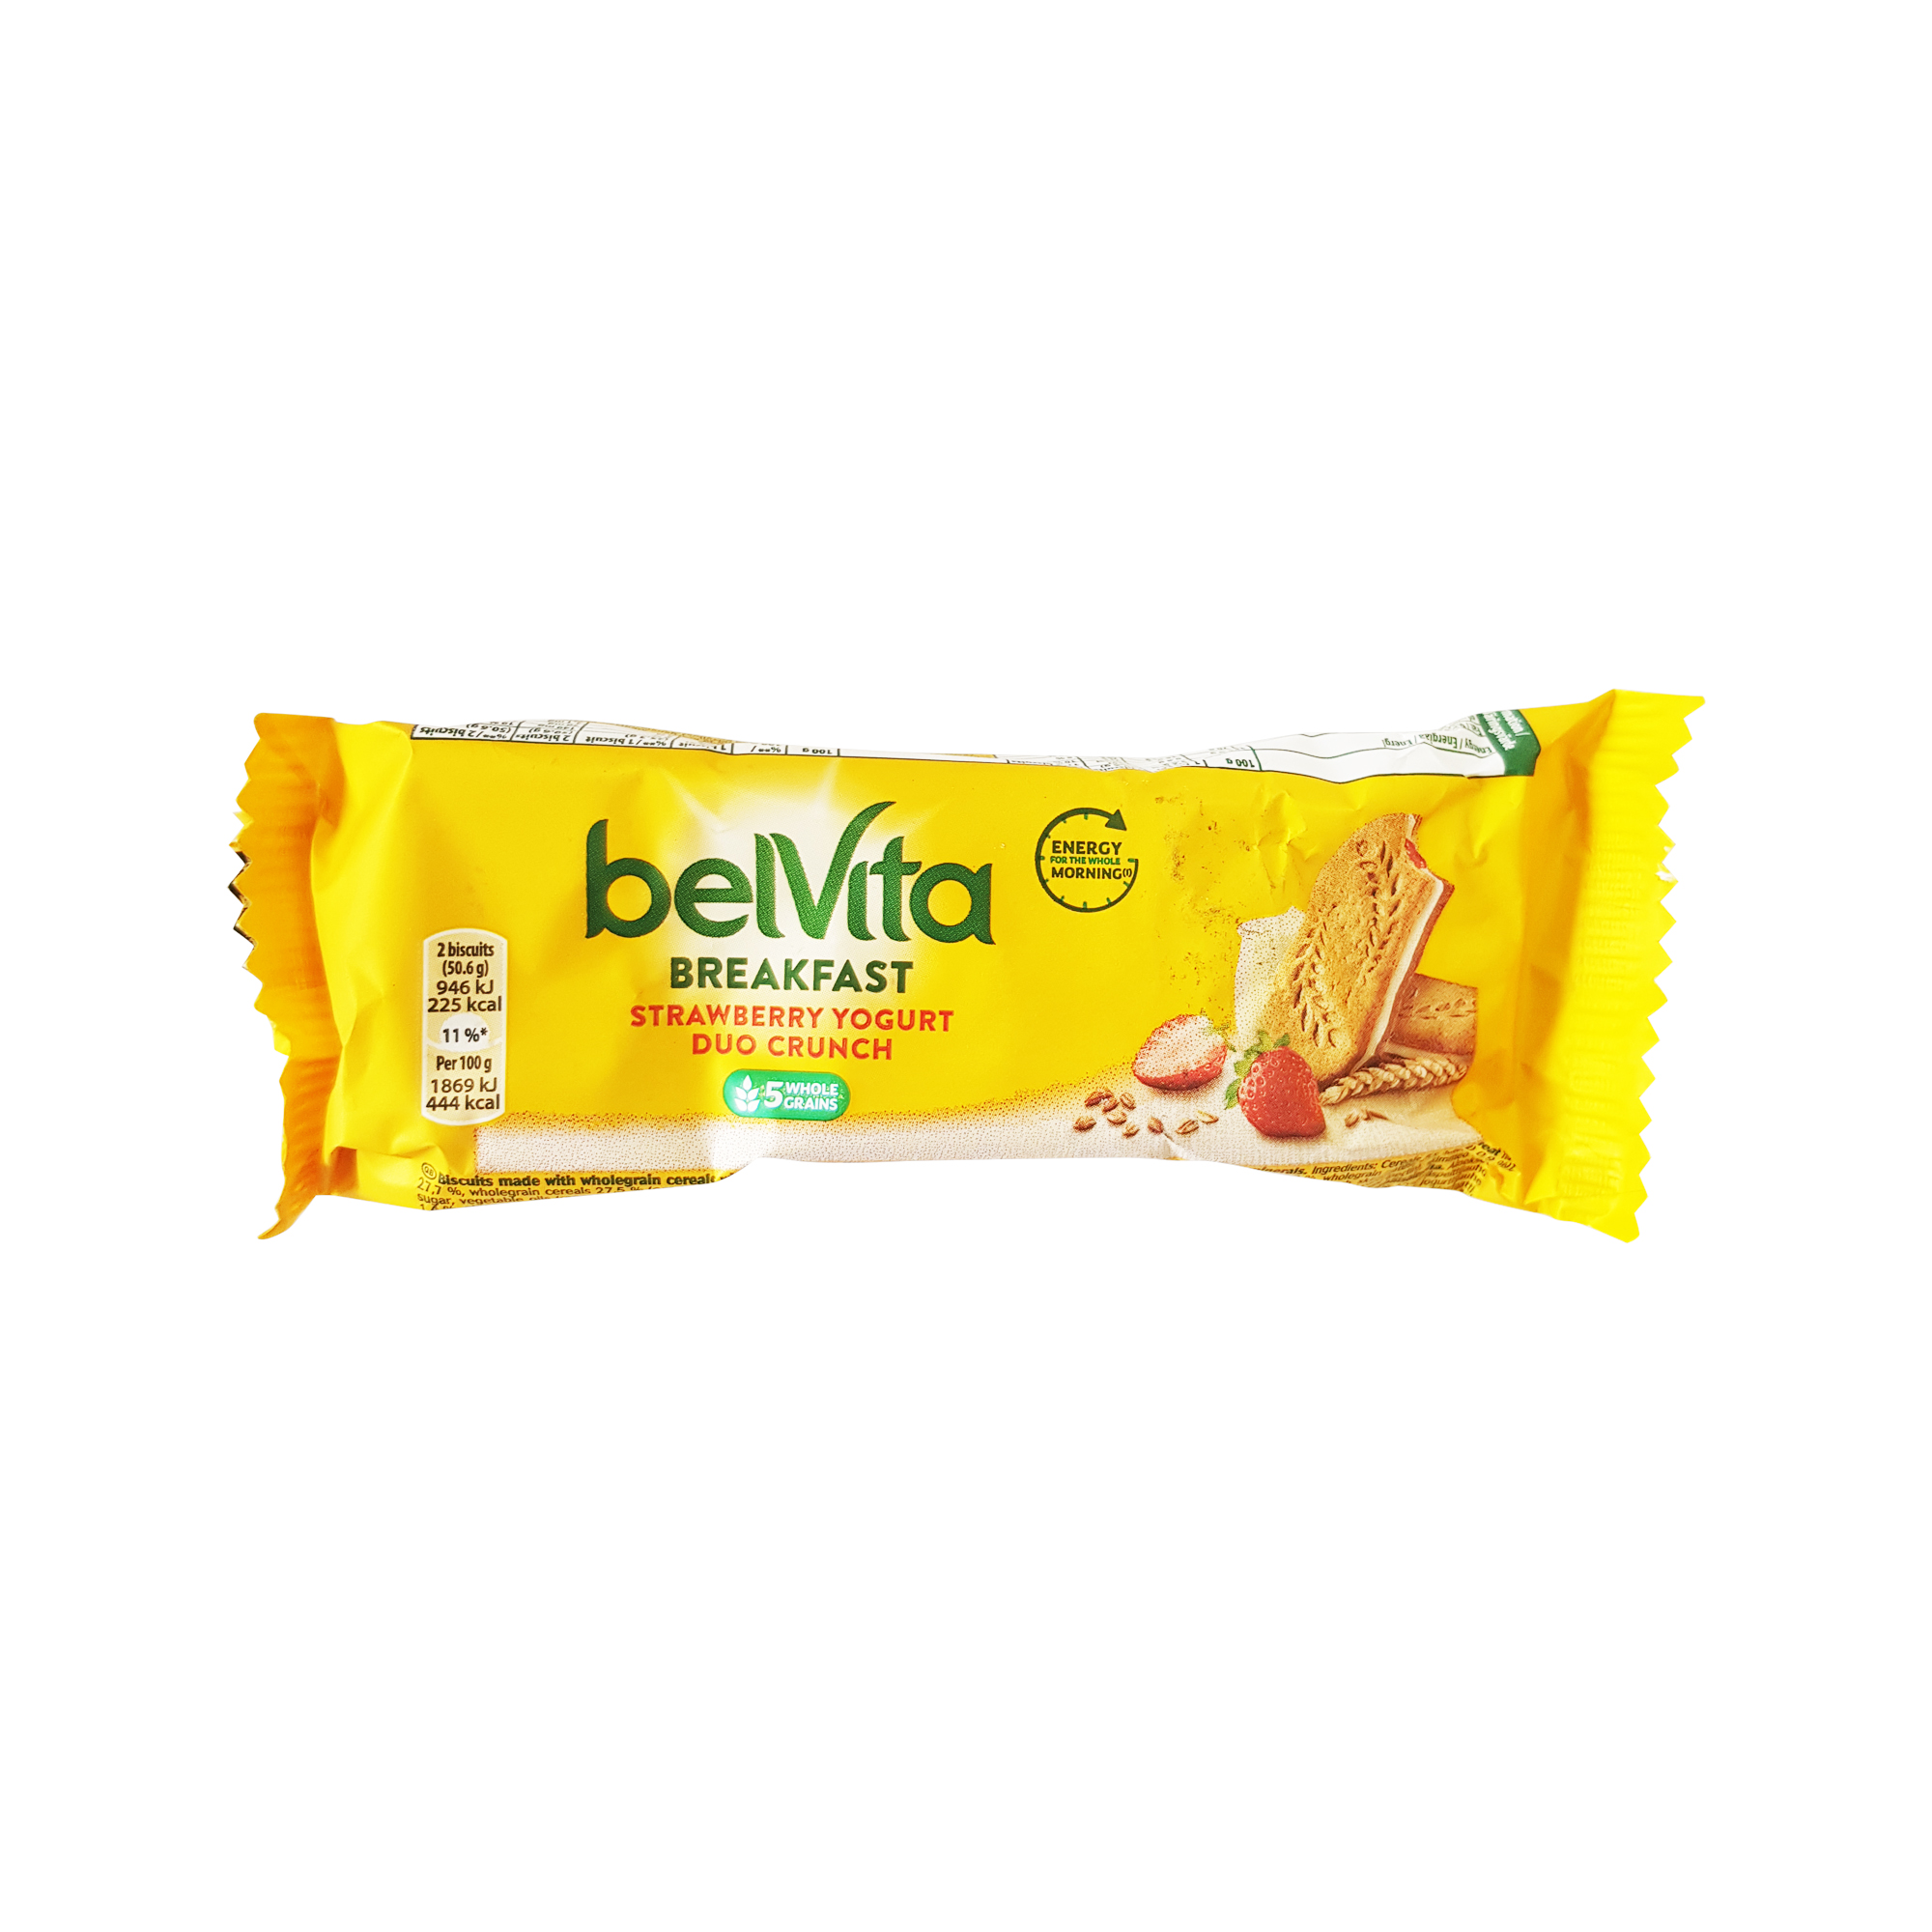 Belvita Breakfast Biscuits Duo Crunch Strawberry Yogurt (50.6g)